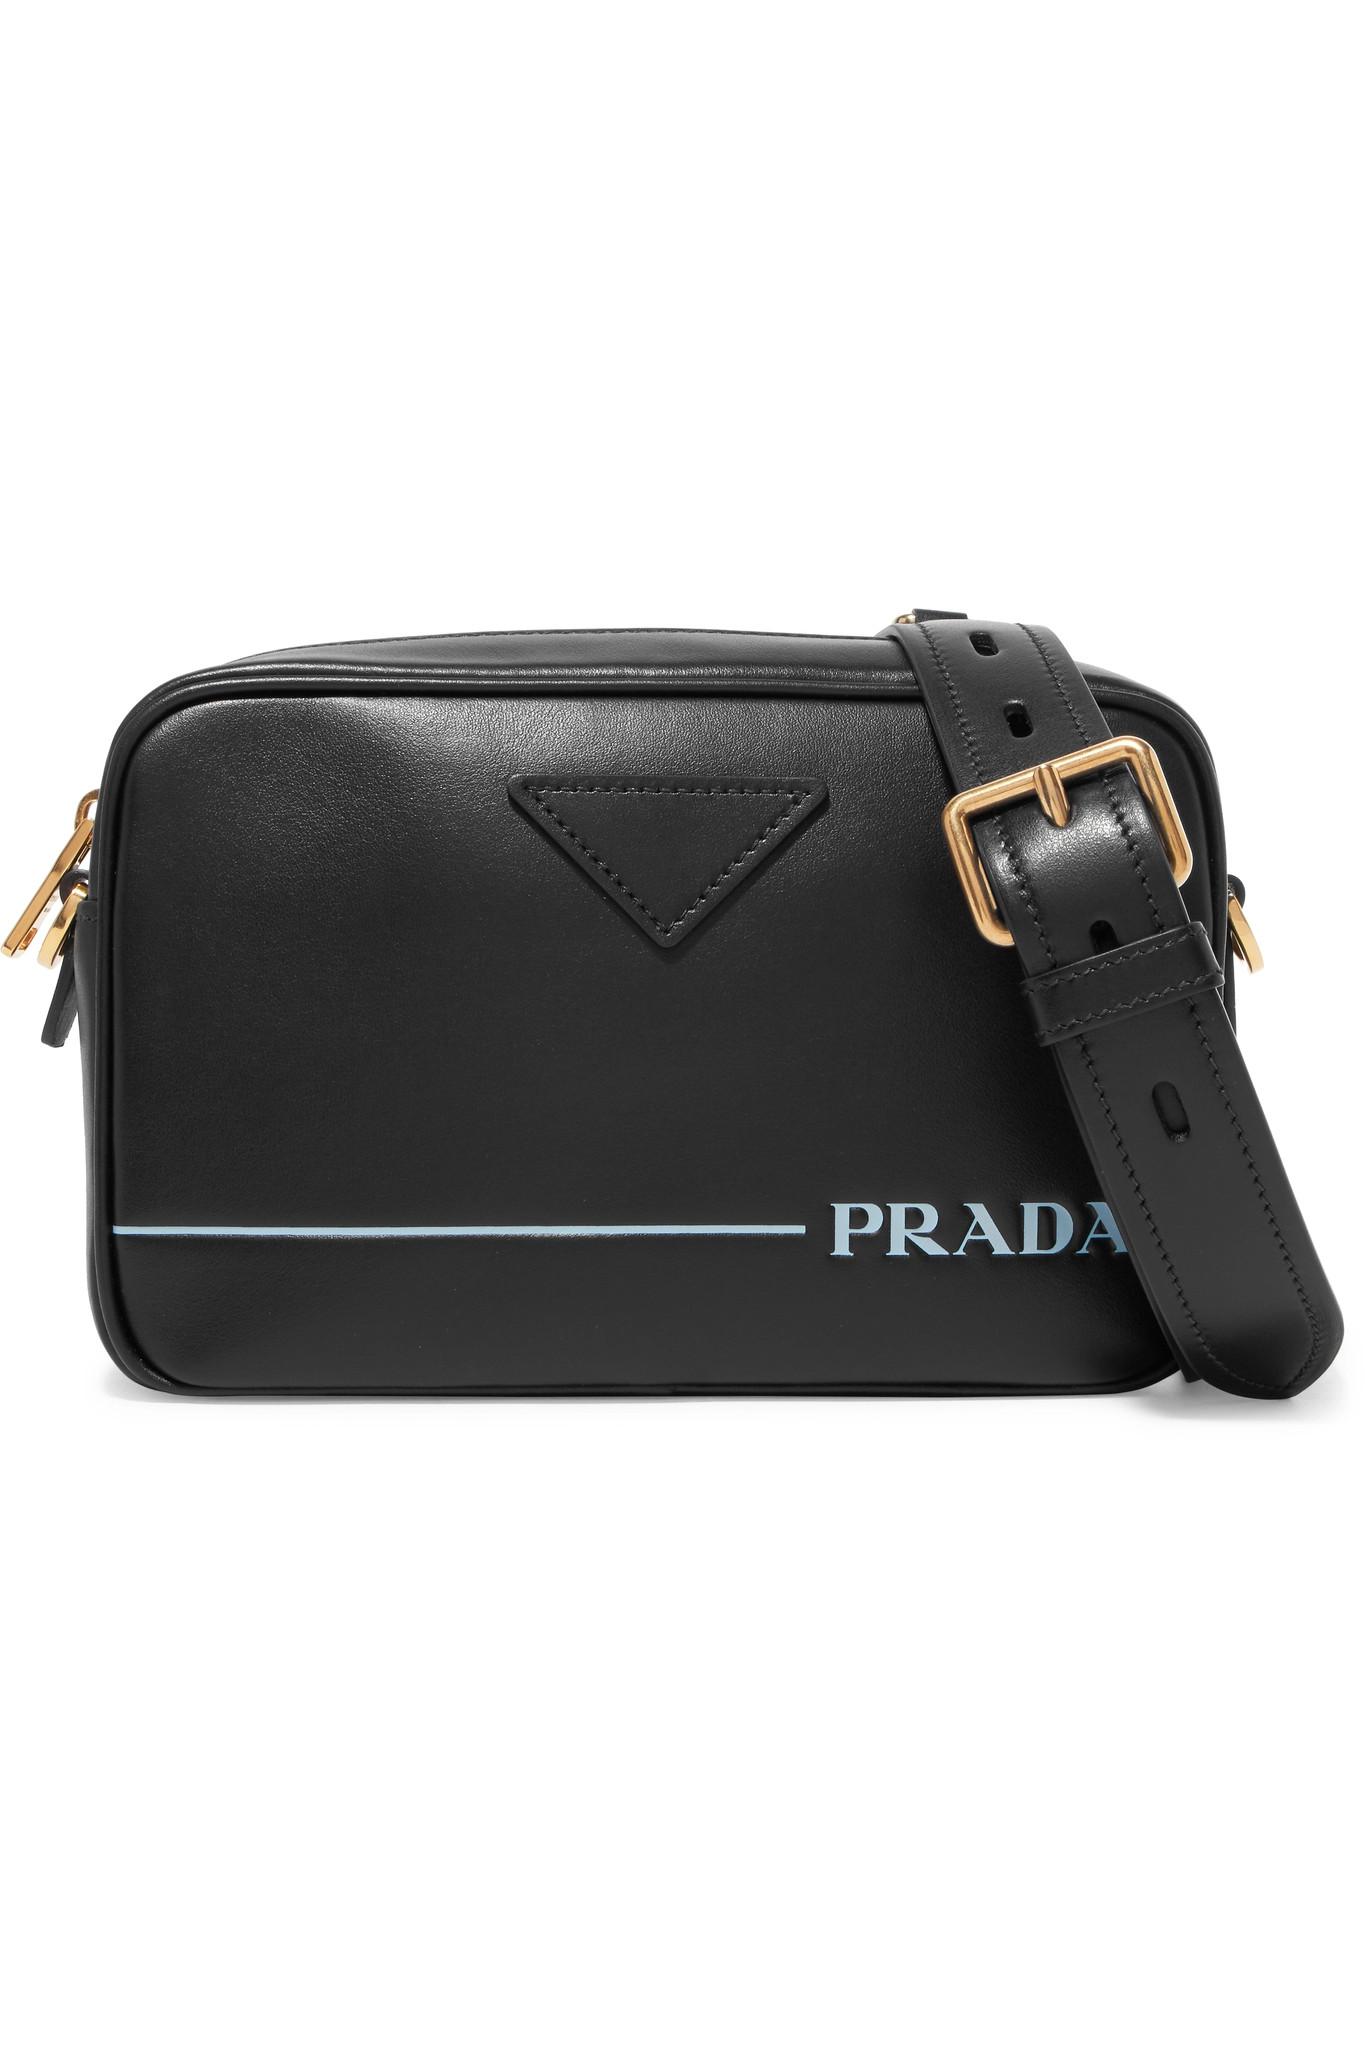 Prada City Calf Mirage Camera Bag